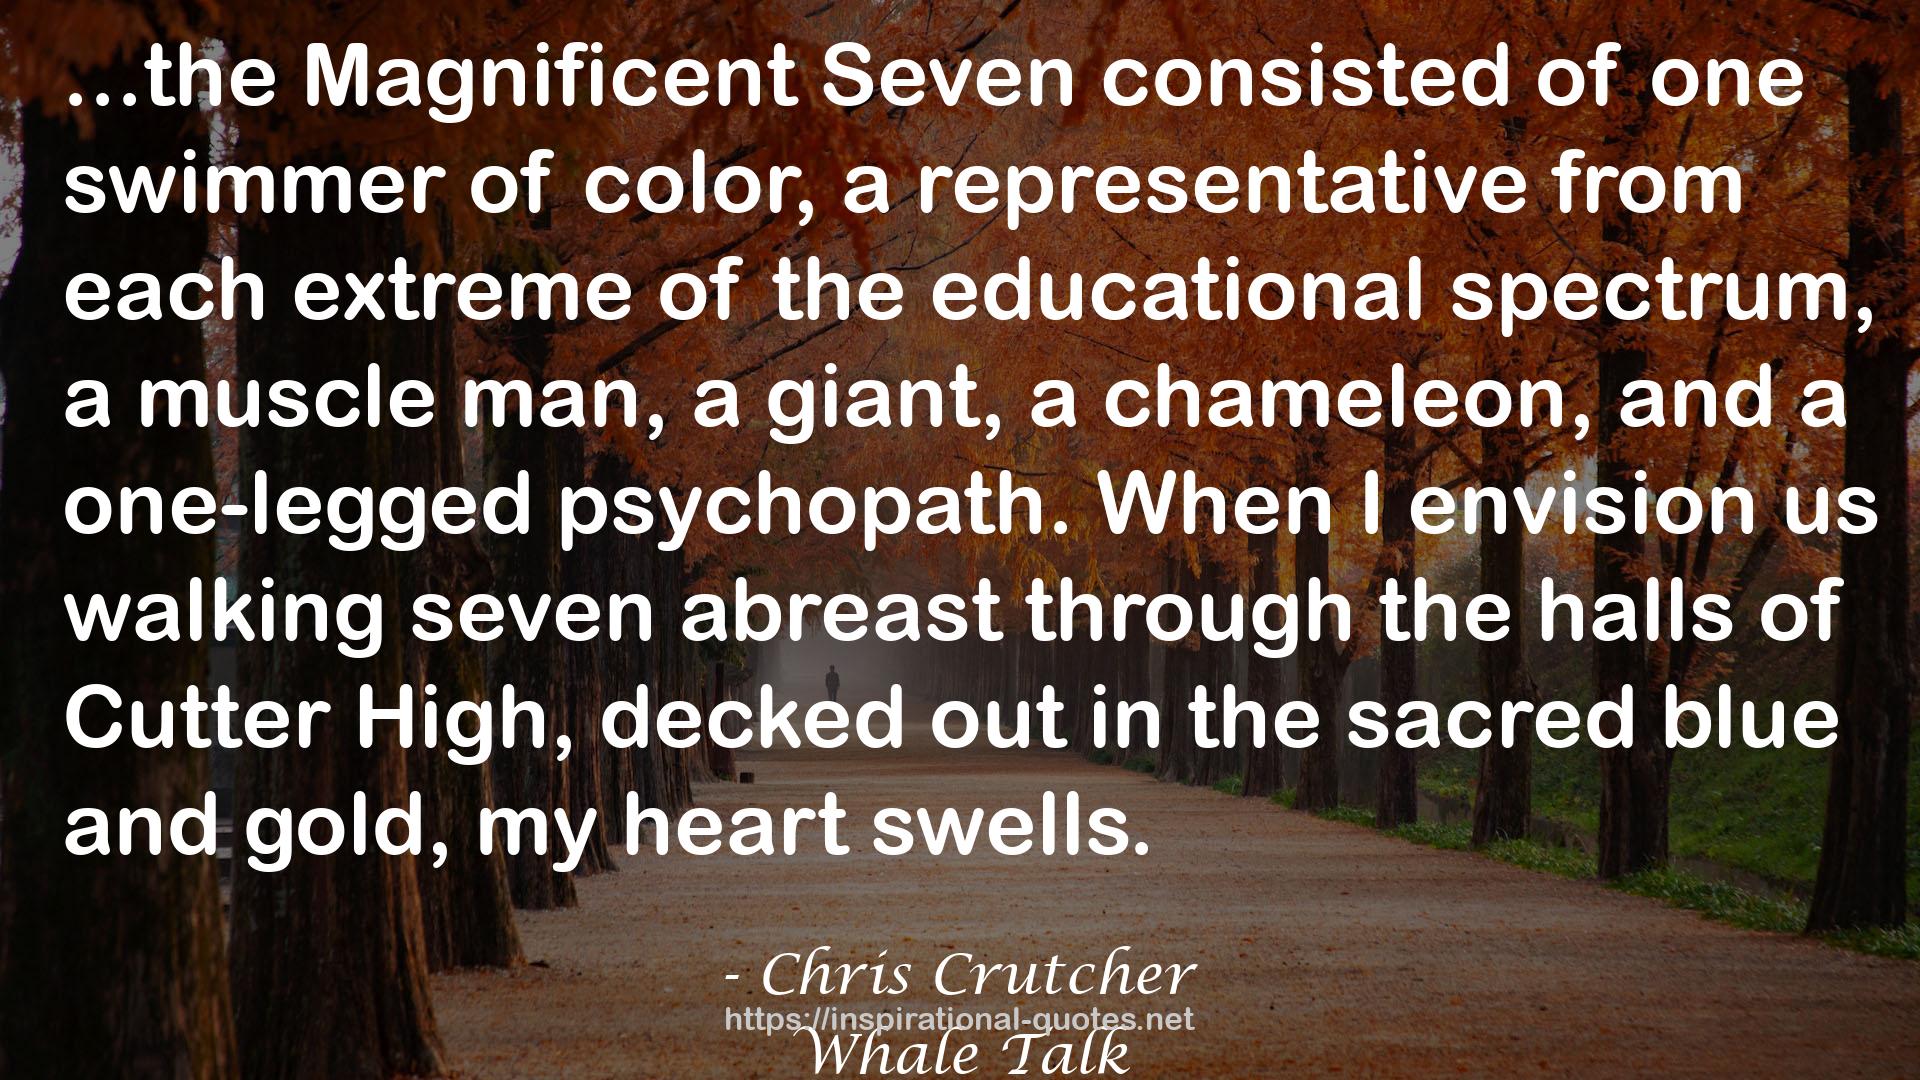 Chris Crutcher QUOTES